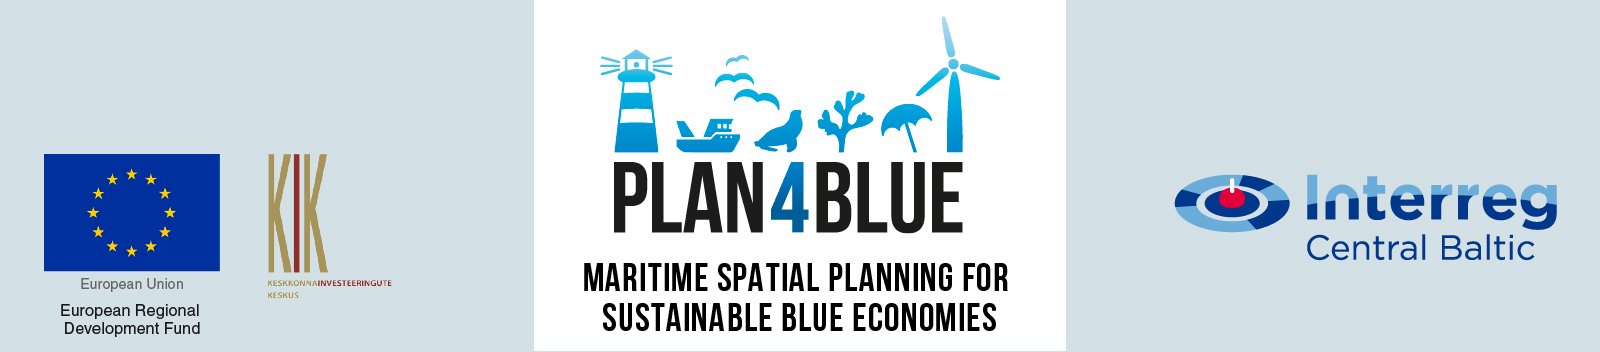 Plan4Blue-rahoittajat-logo